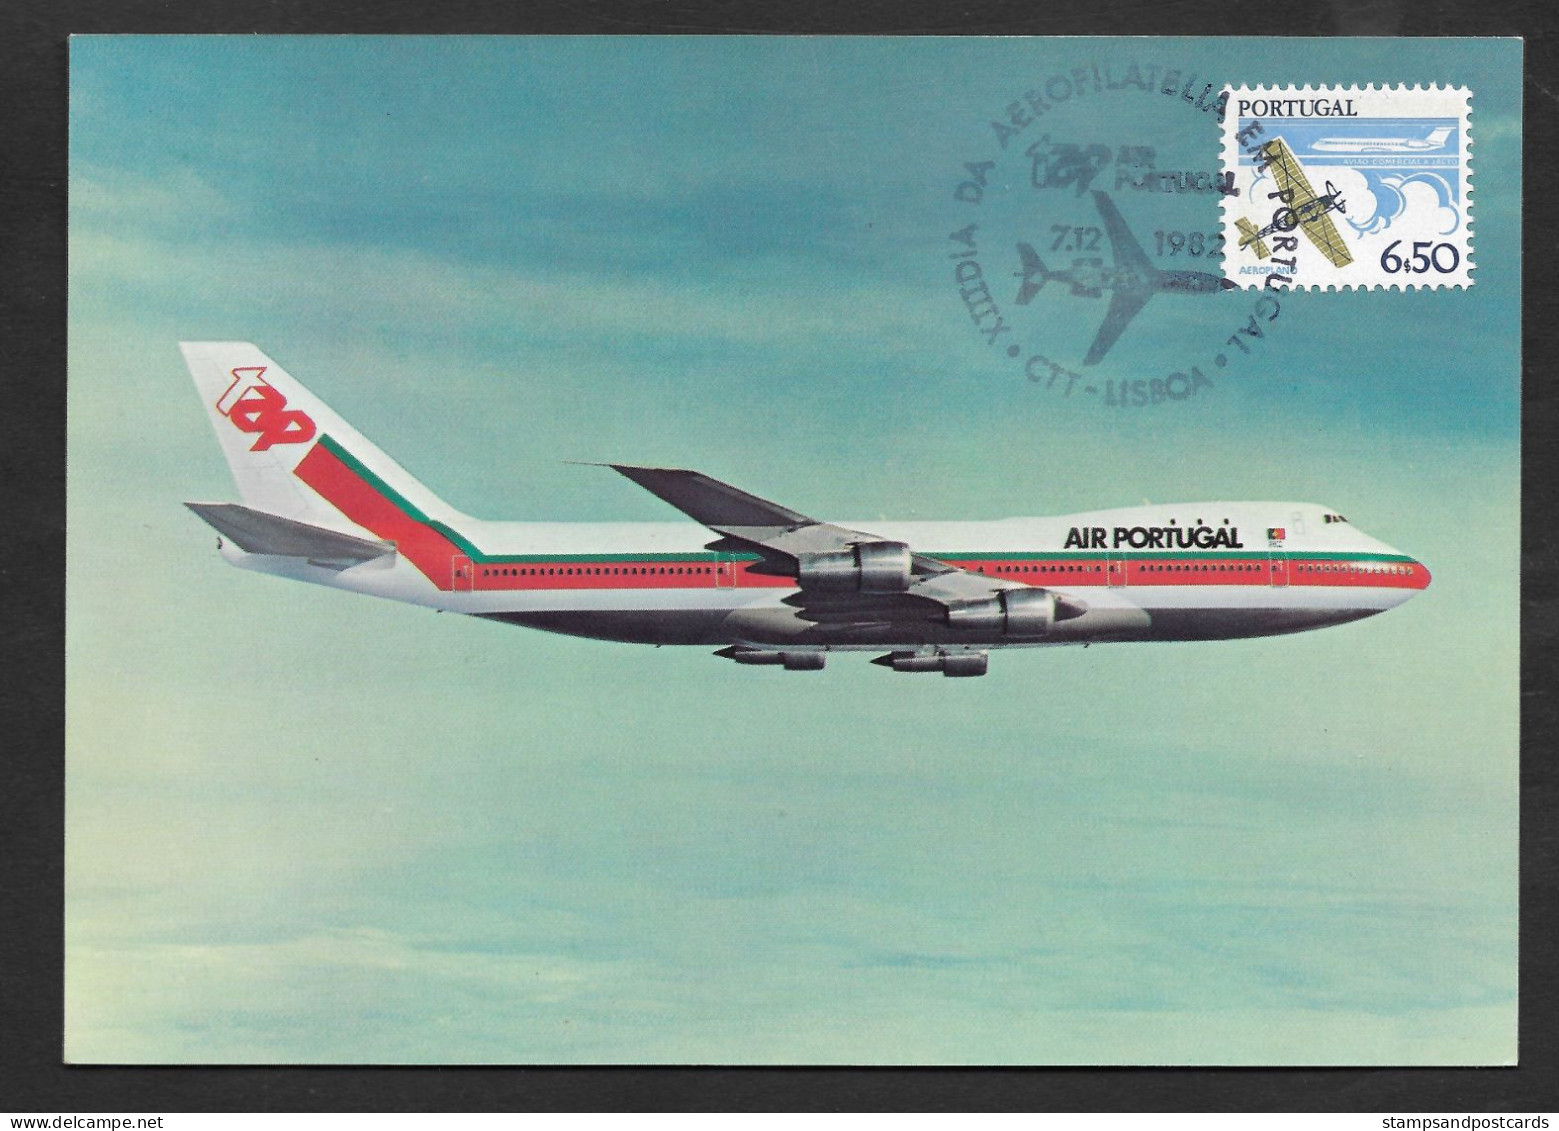 Portugal Avion TAP Air Portugal Carte Postale Maximum 1982 Airplane Airline QSL Postcard Maxicard - Aviones